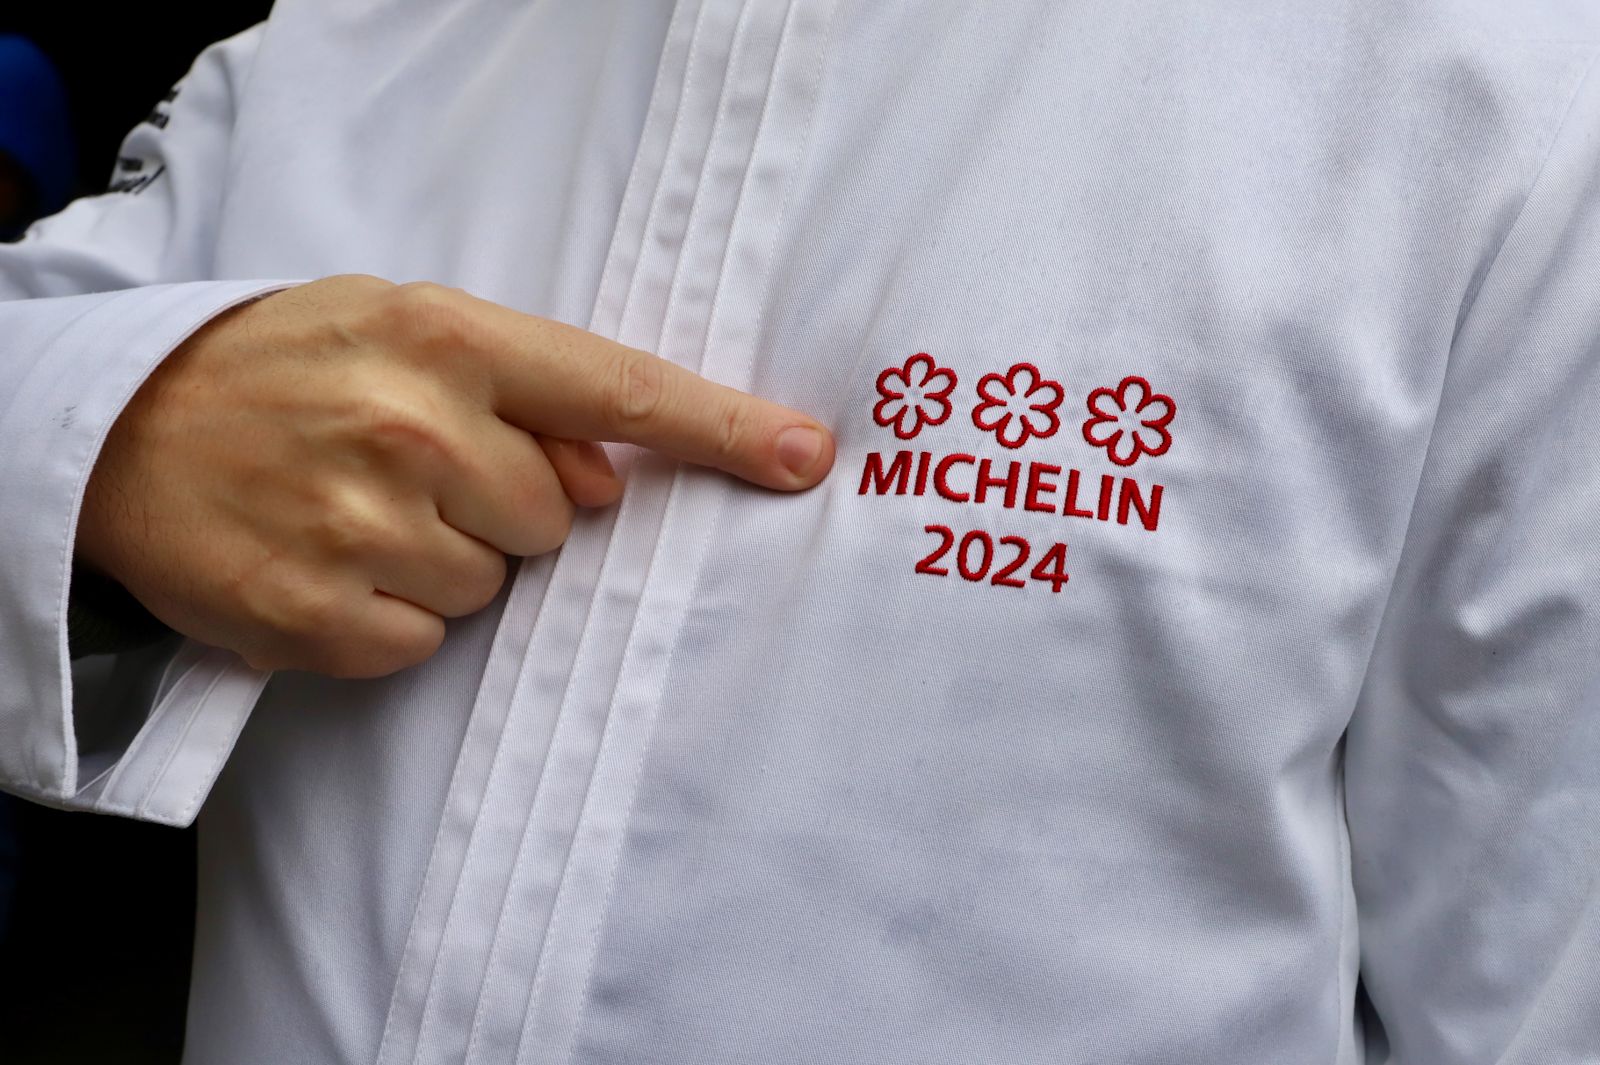 Paco Morales celebra en Córdoba su tercera estrella Michelin